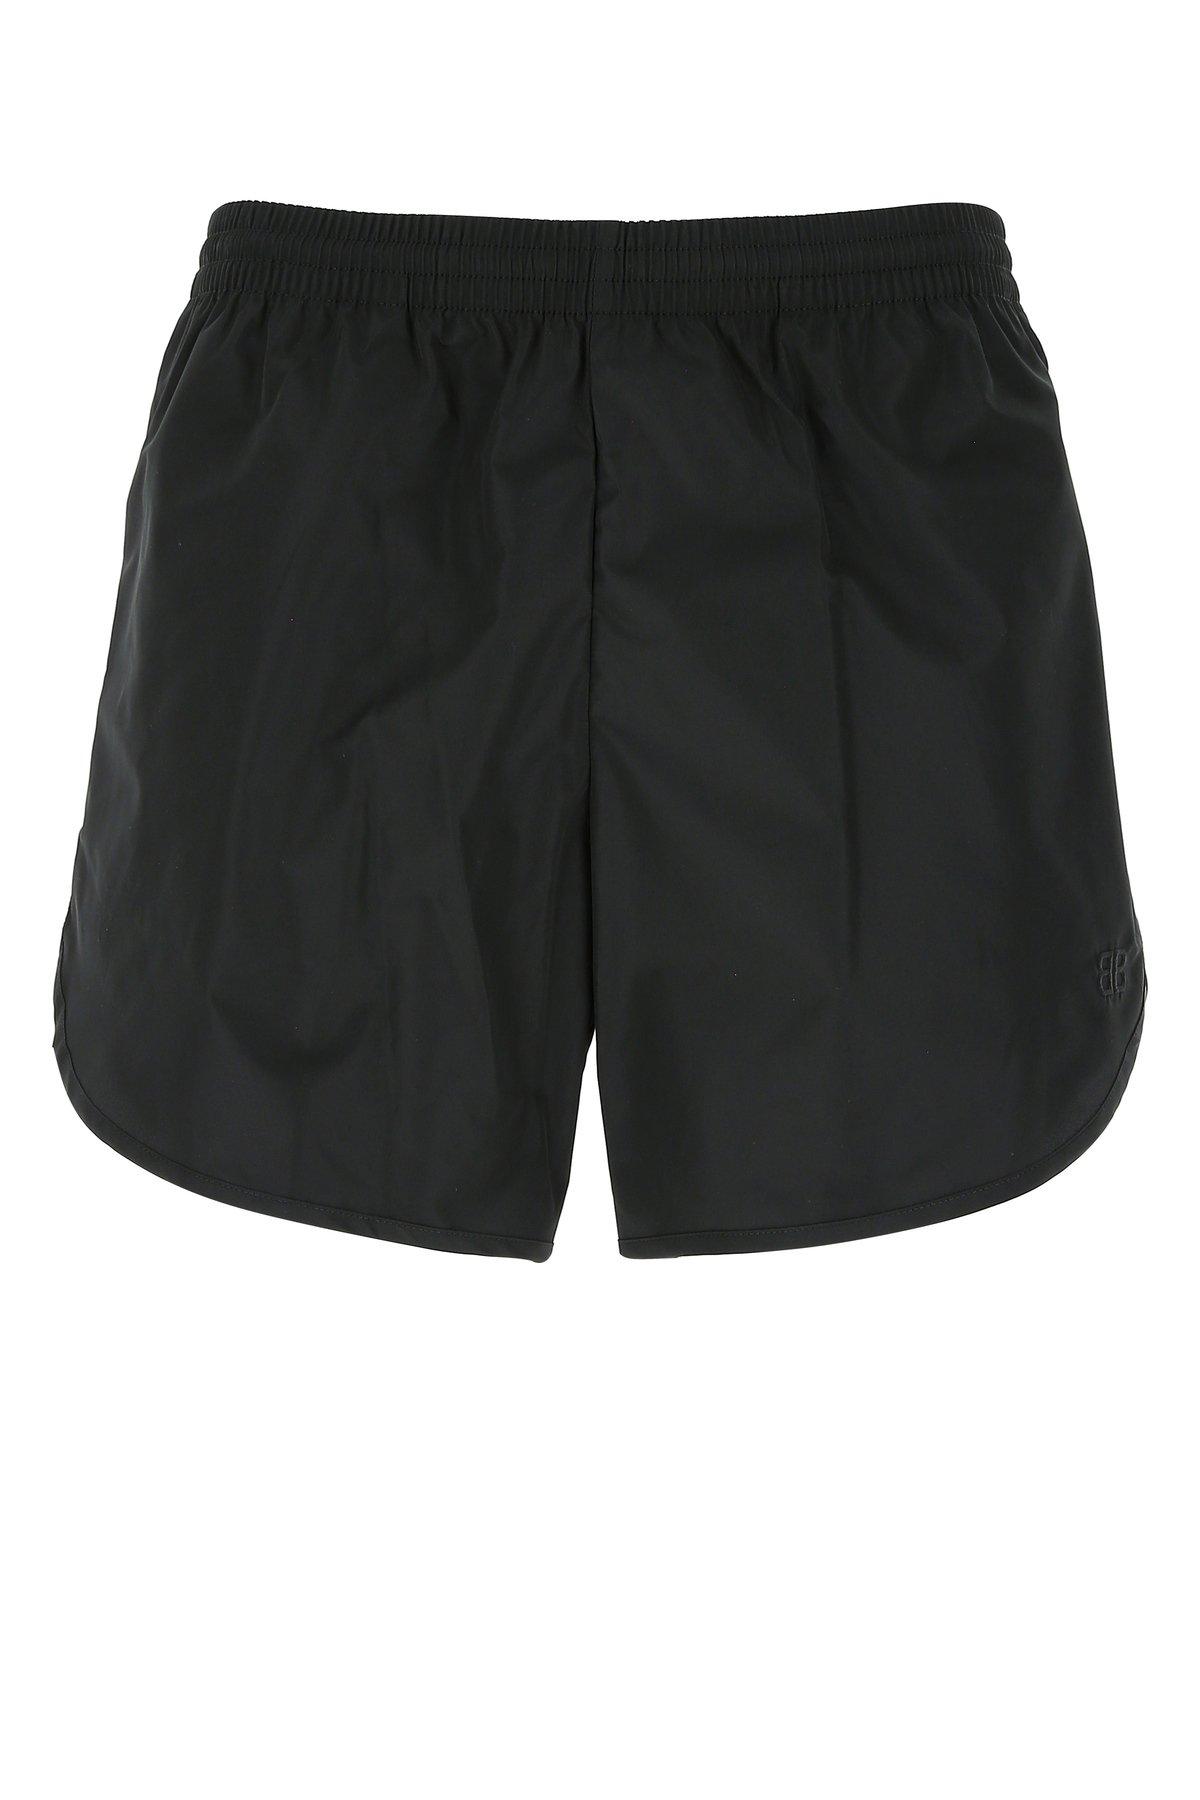 Balenciaga Synthetic Plain Swim Shorts in Black for Men - Lyst